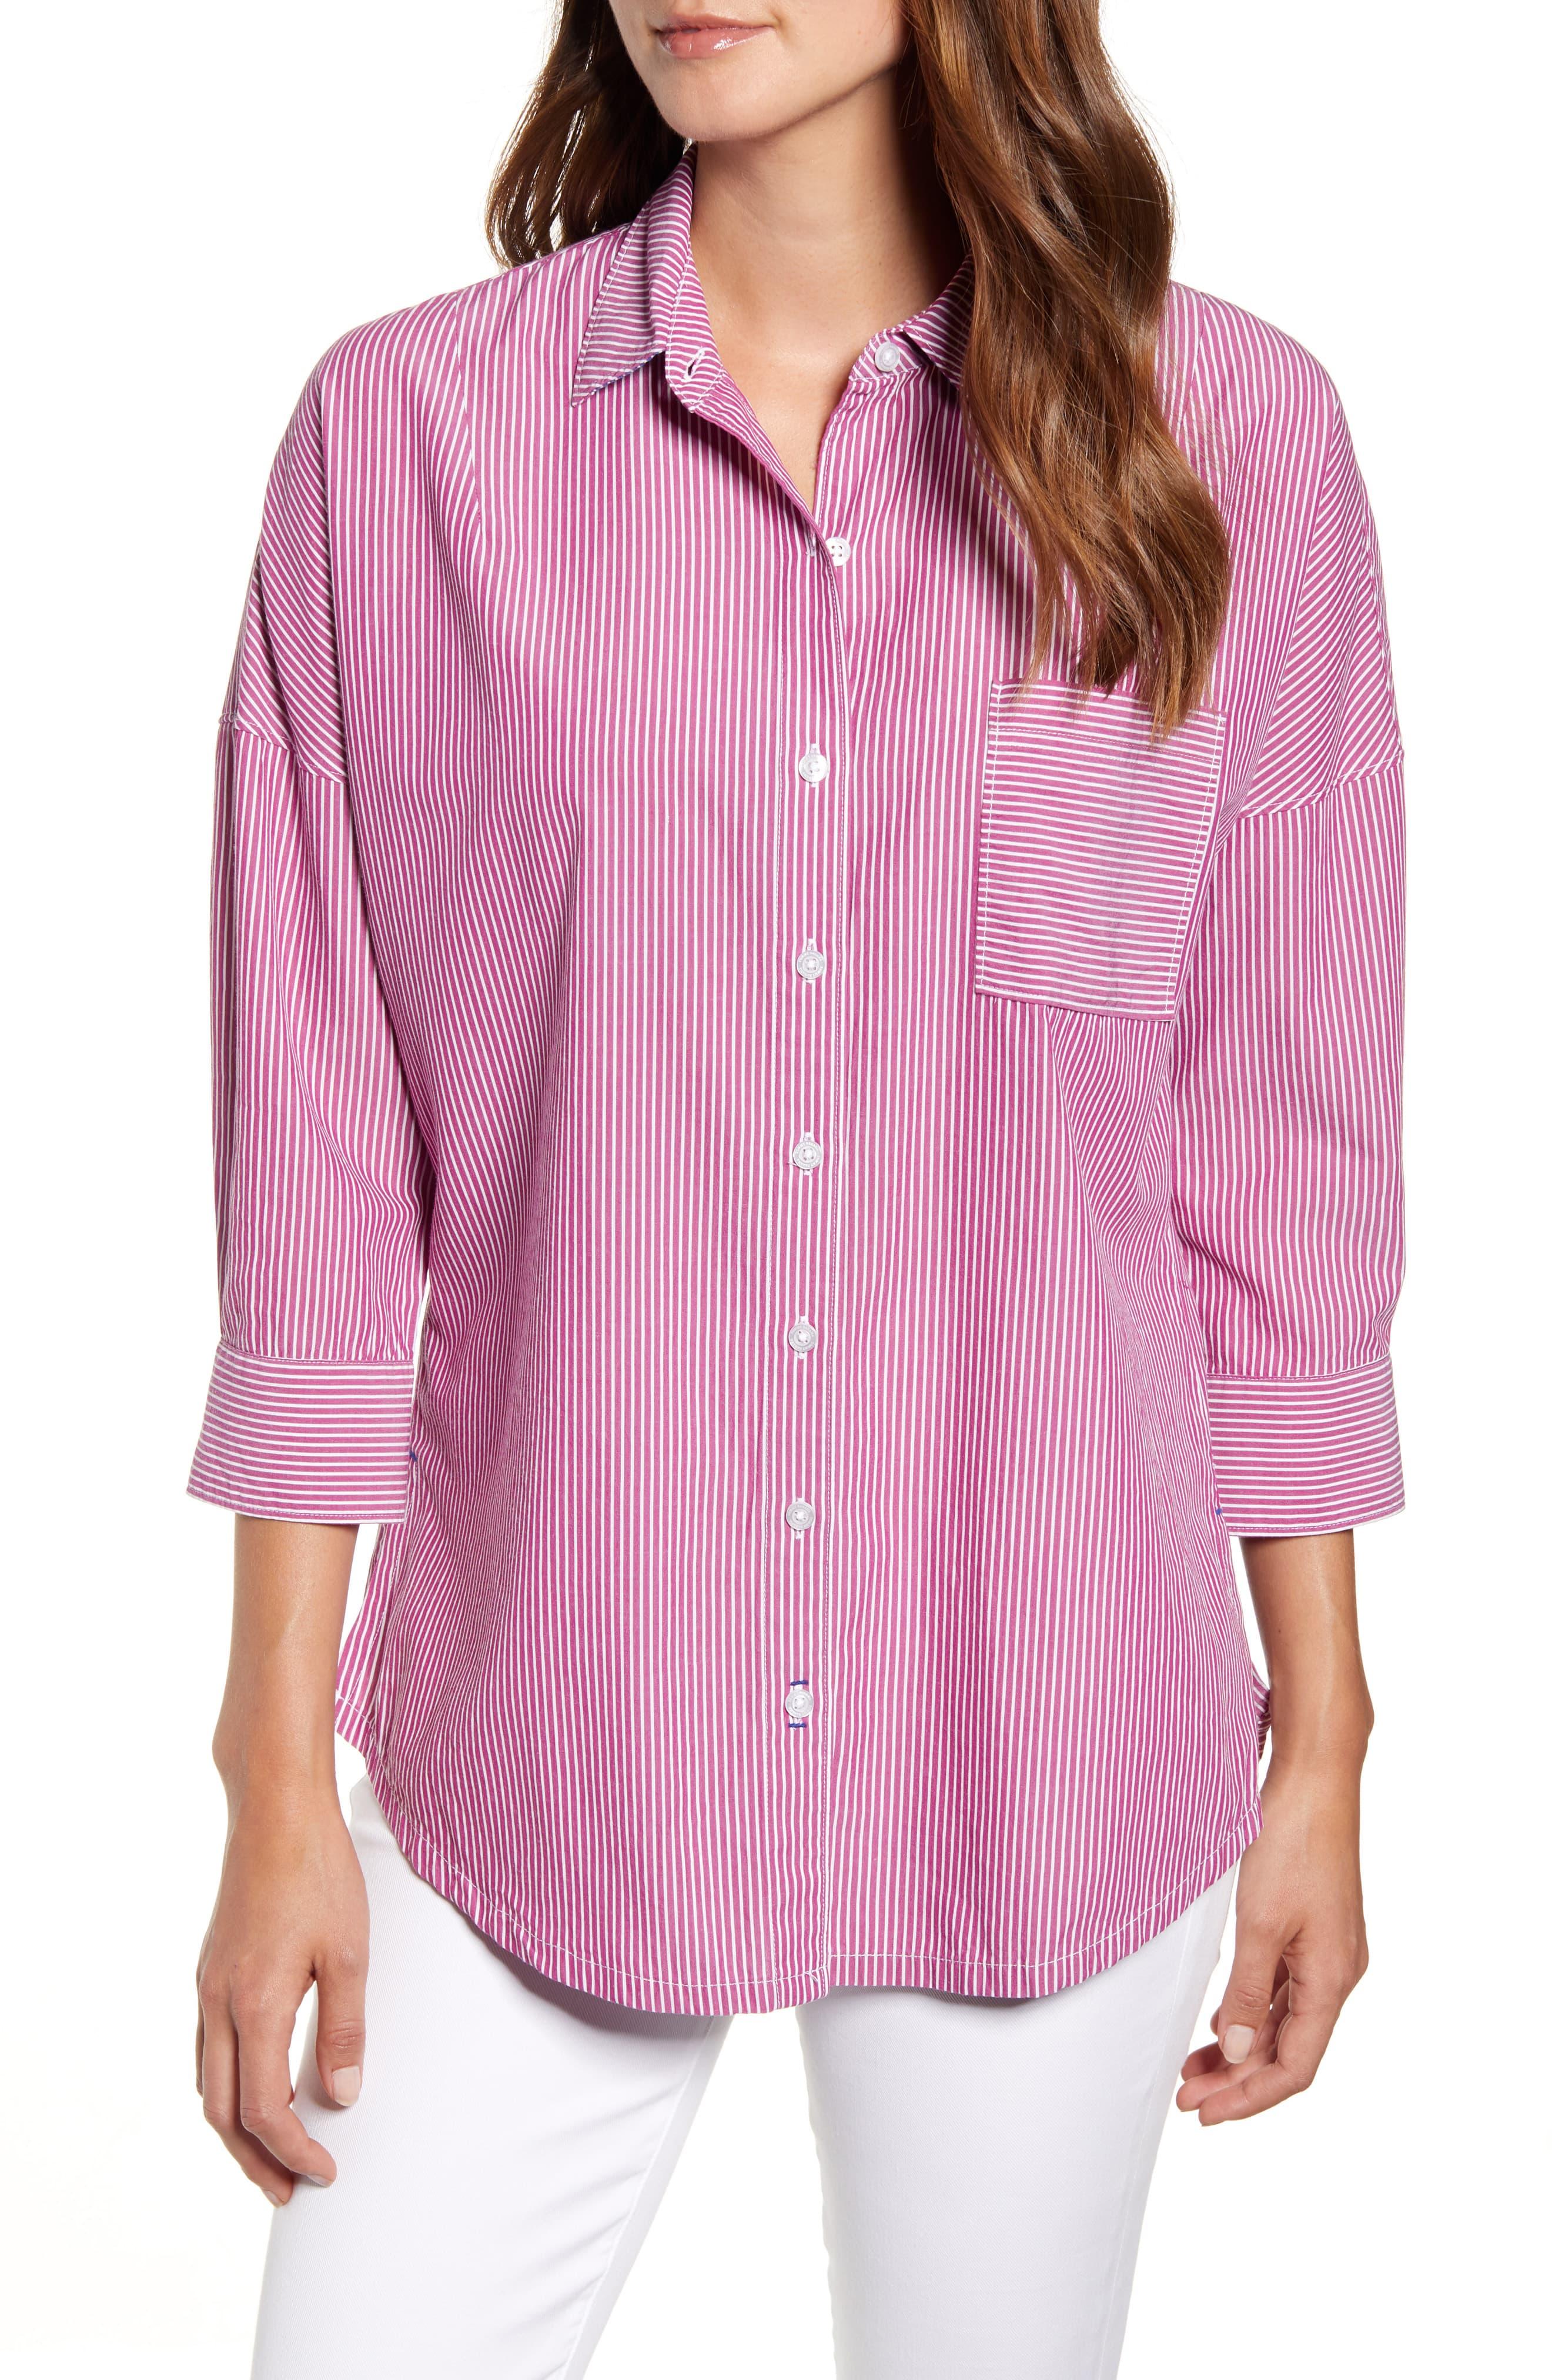 Tommy Bahama Breezy Bliss Stripe Shirt in Bright Fuchsia (Pink) - Lyst